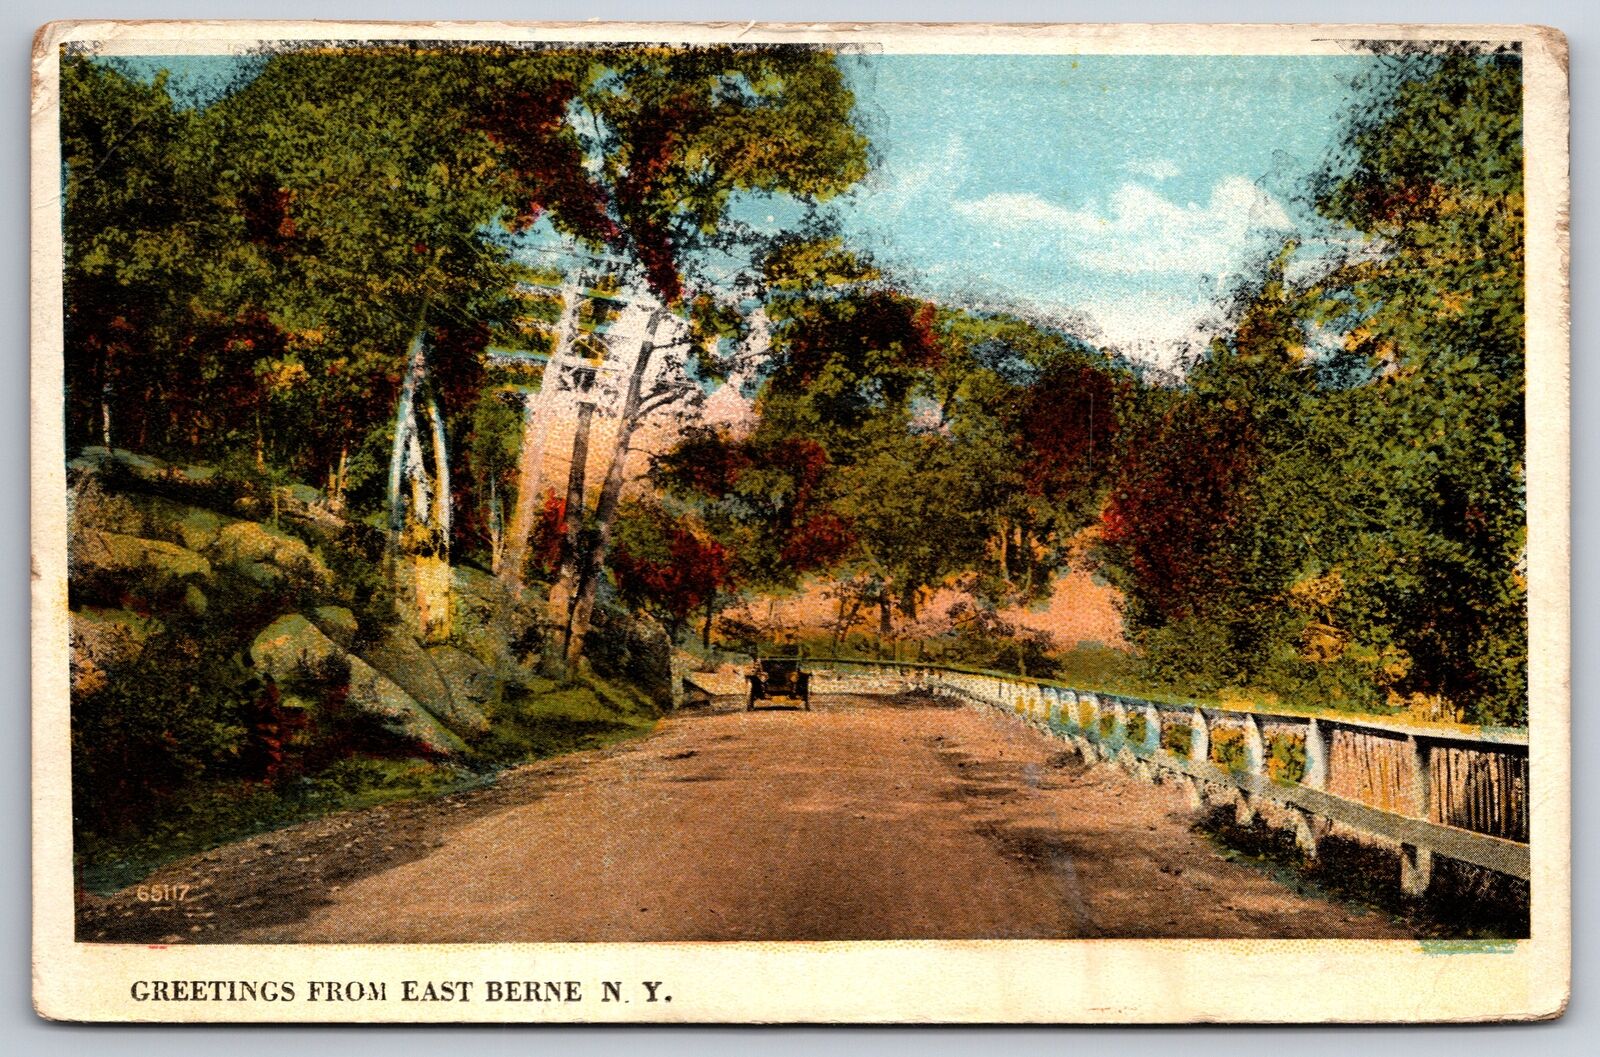 East Berne New York~Car On Forested Road Greeting~Vintage Postcard